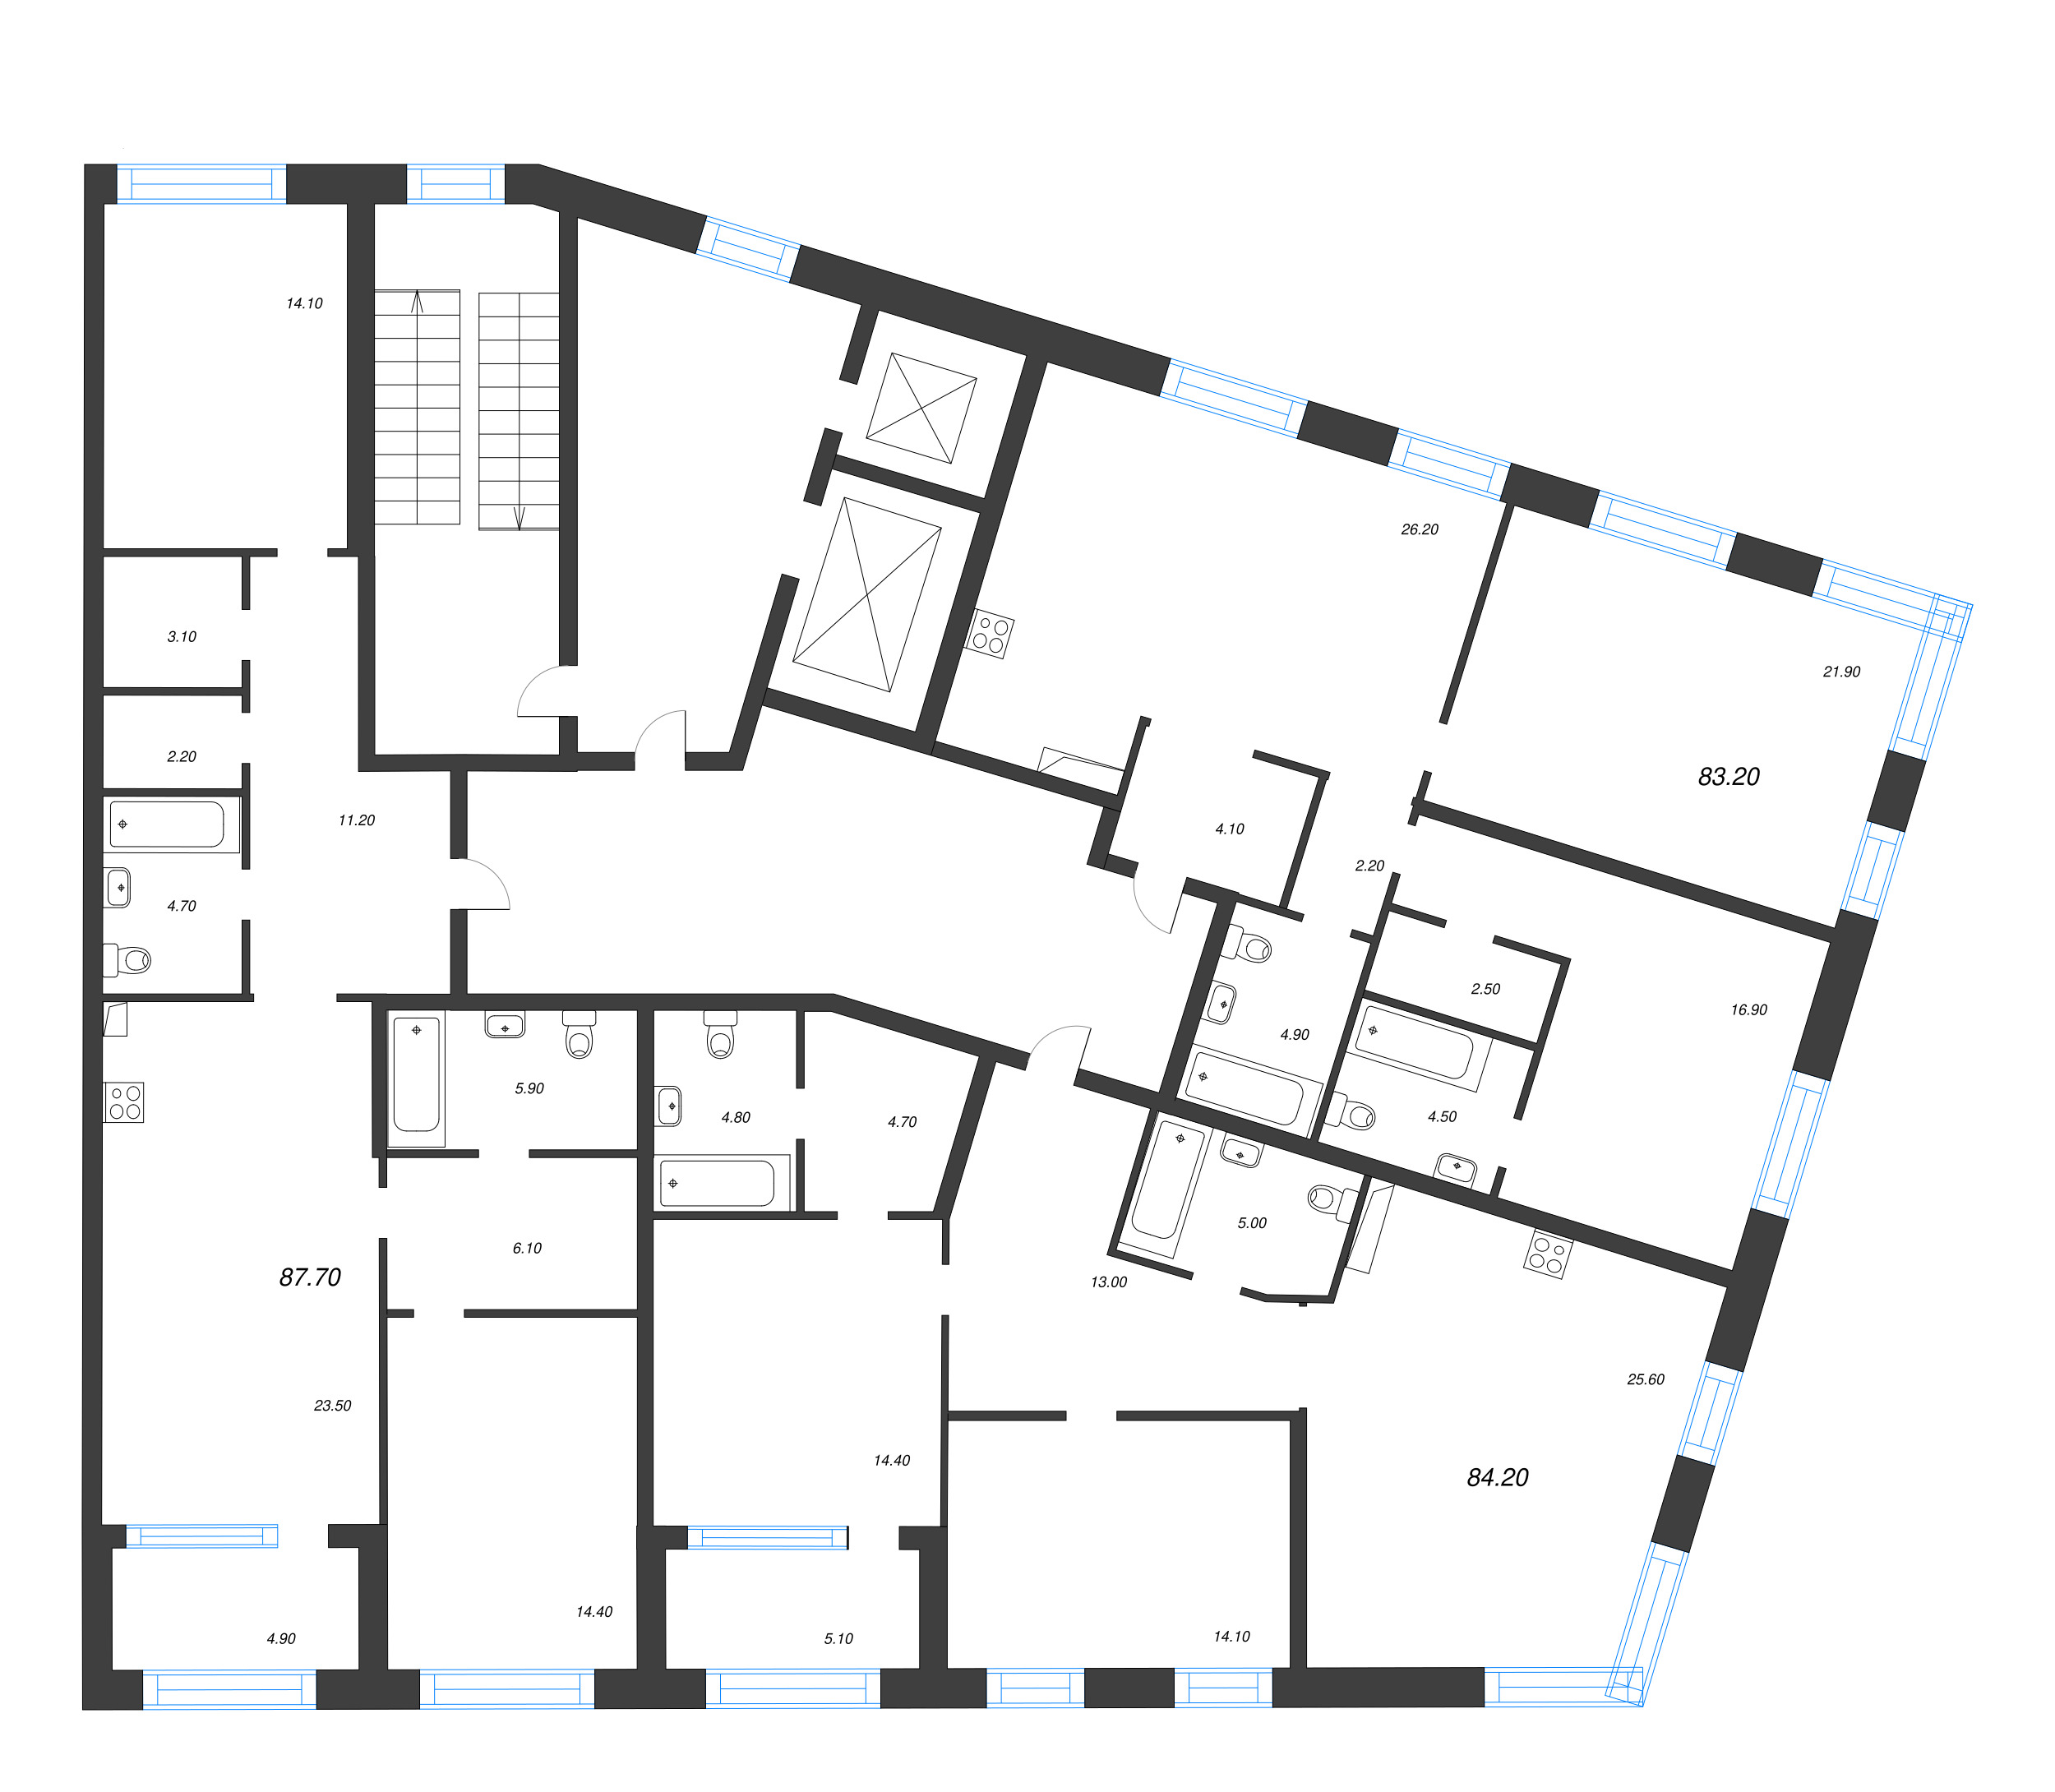 3-комнатная (Евро) квартира, 83.2 м² в ЖК "ЛДМ" - планировка этажа